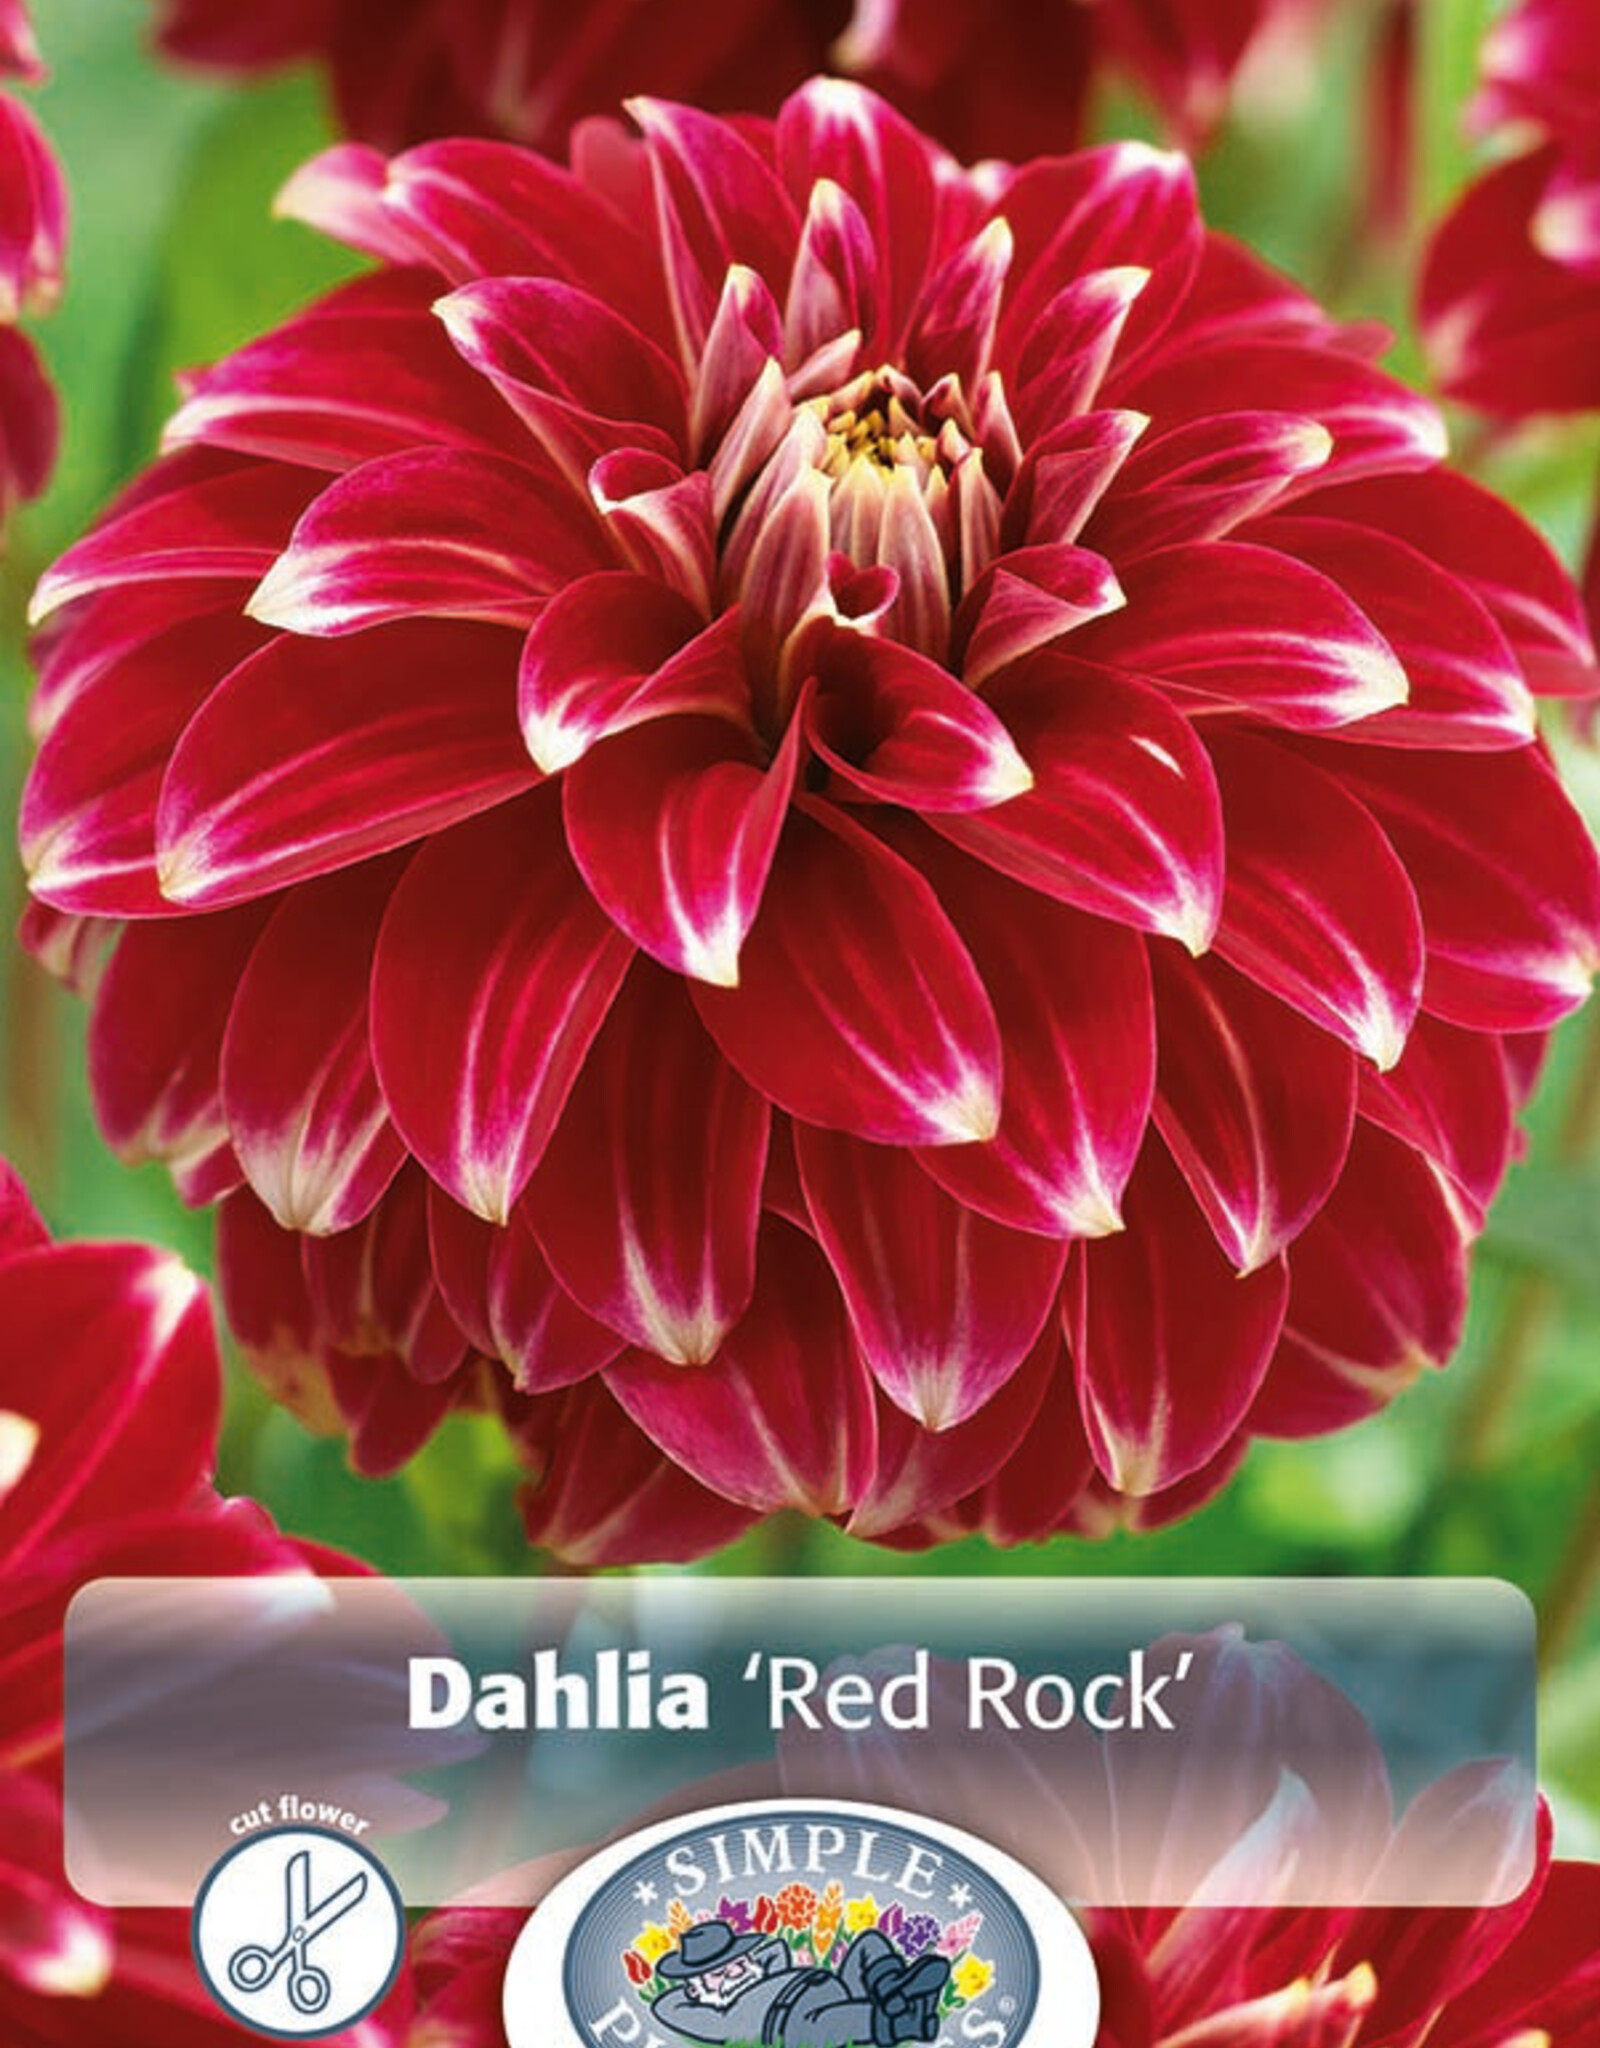 DeVroomen Dahlia Decorative Red Rock 1 tuber